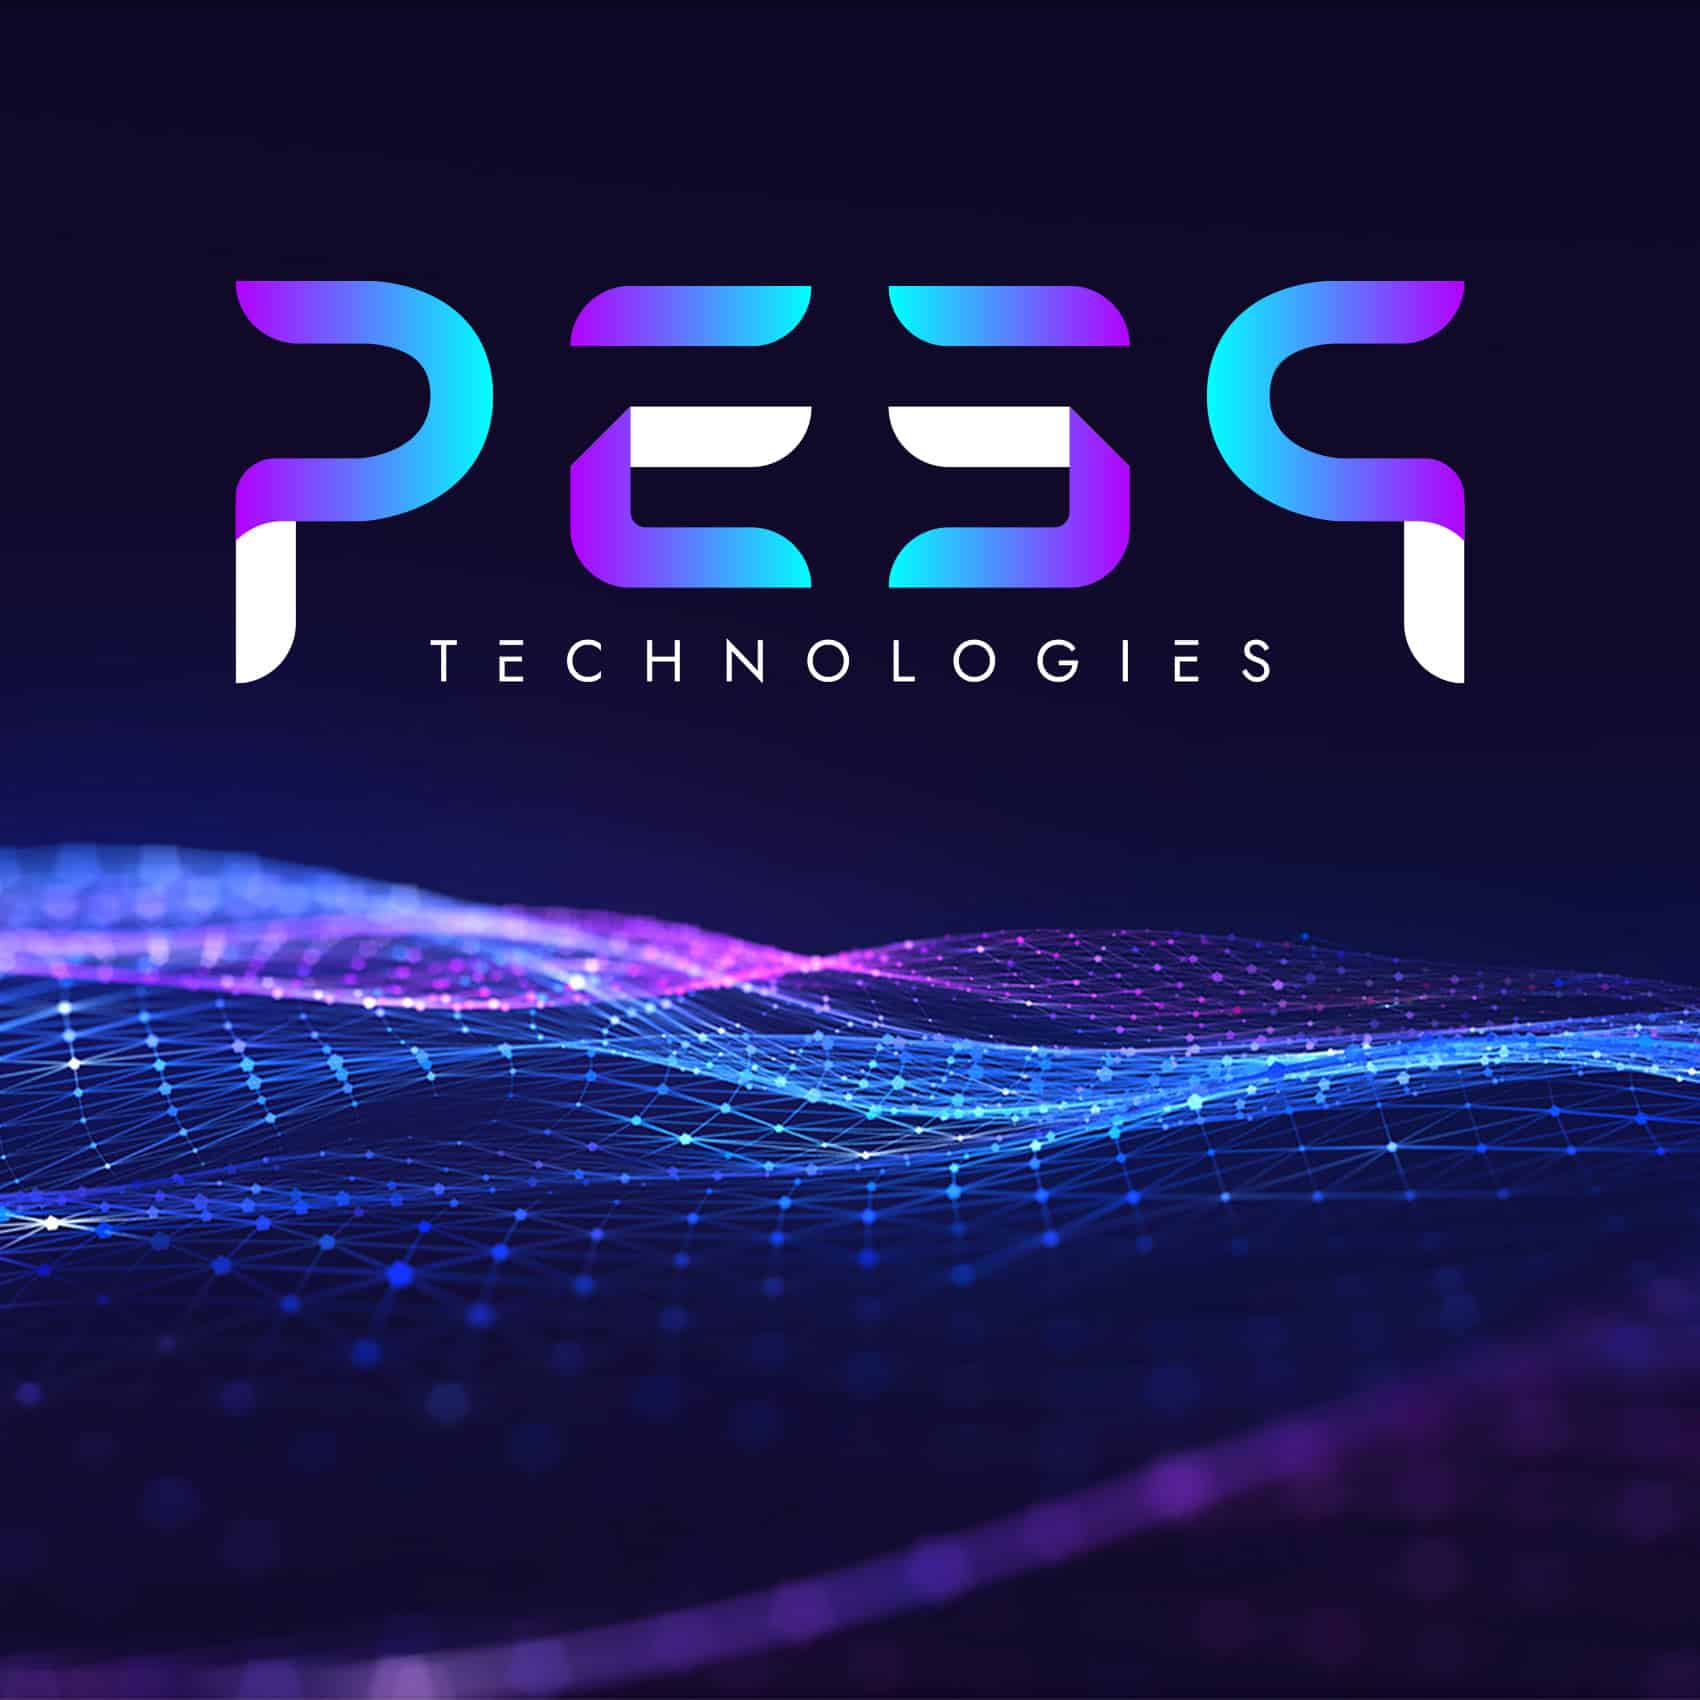 PE3Q Technologies